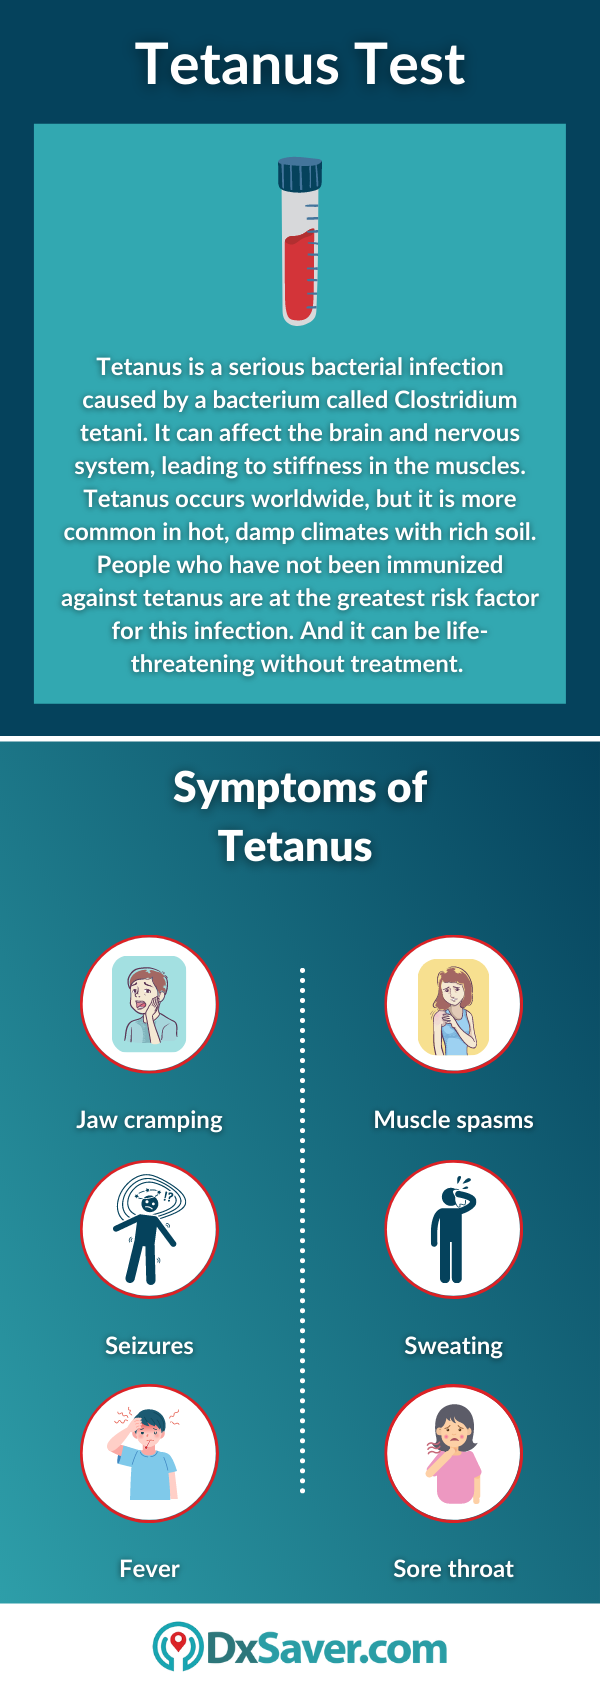 Tetanus test and Symptoms of Tetanus